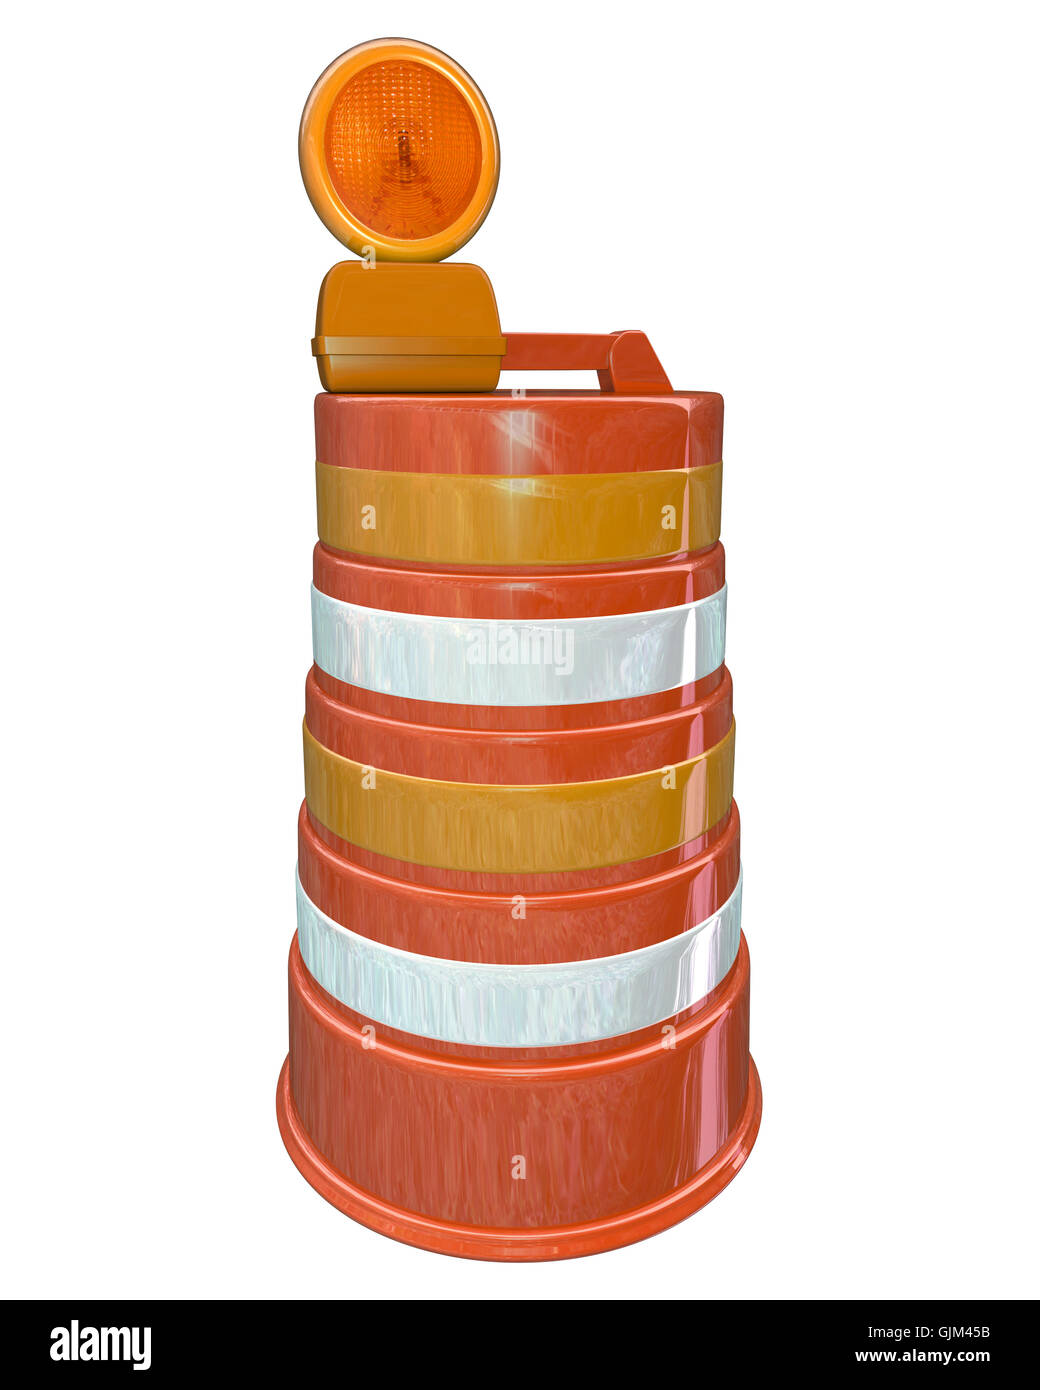 Orange Construction Barrel Road Work Warning Stock Photo